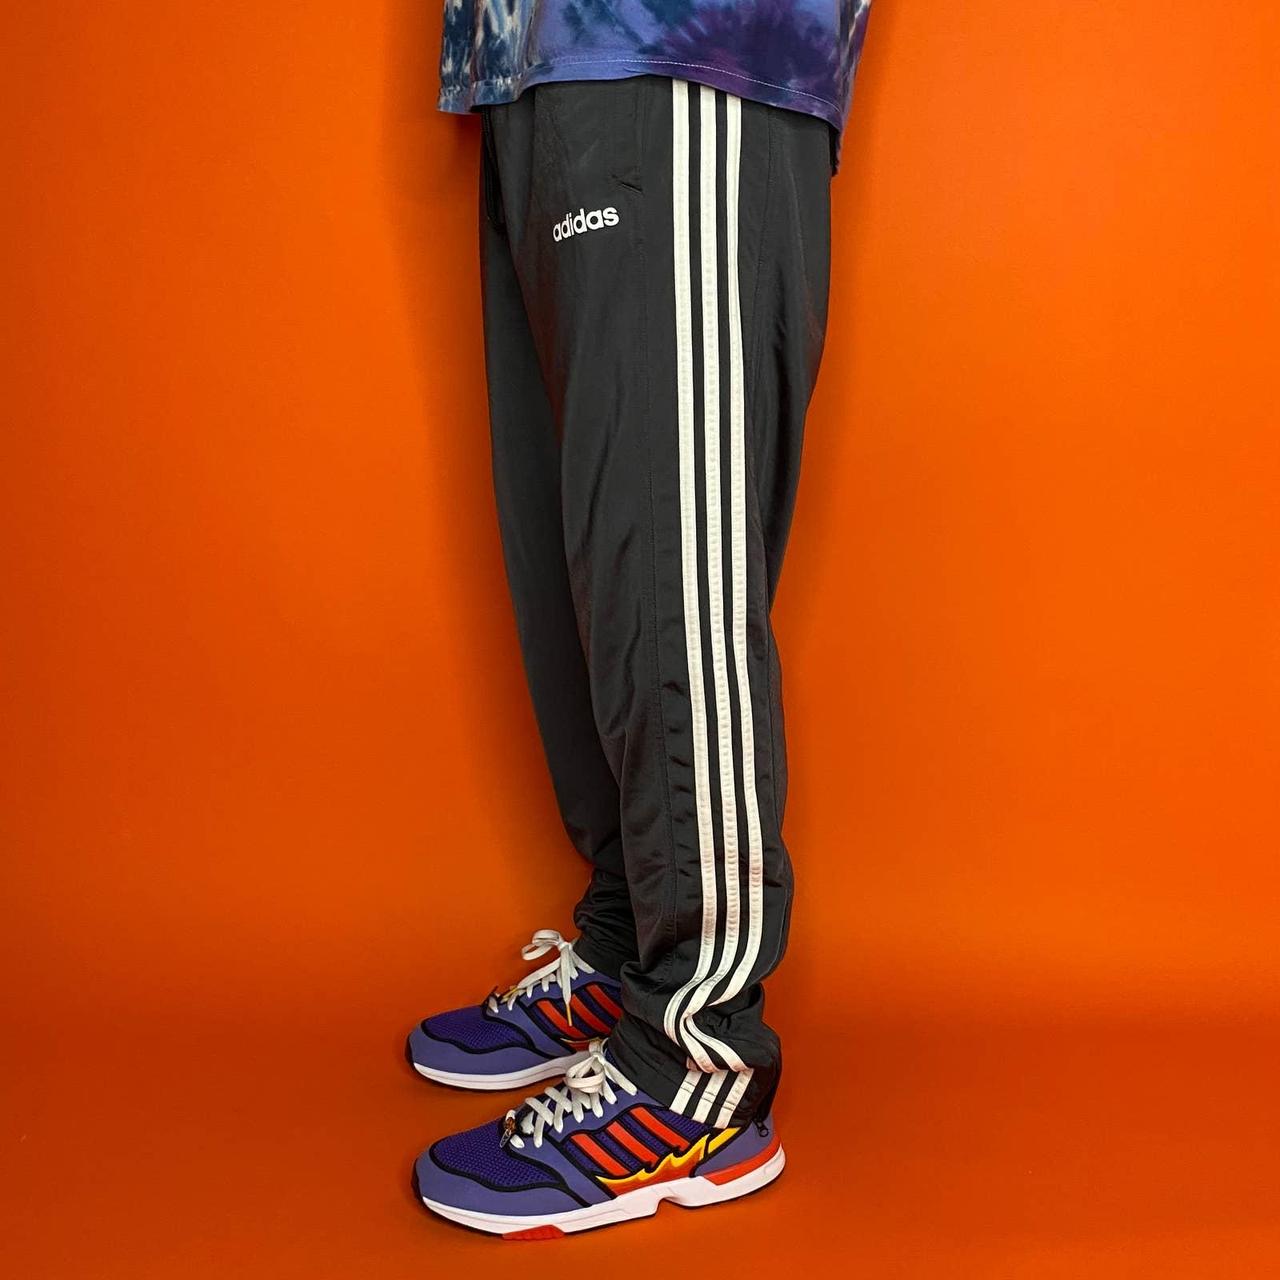 Adidas Sweatpants White 3 Stripes Baggy Fit Gym... - Depop